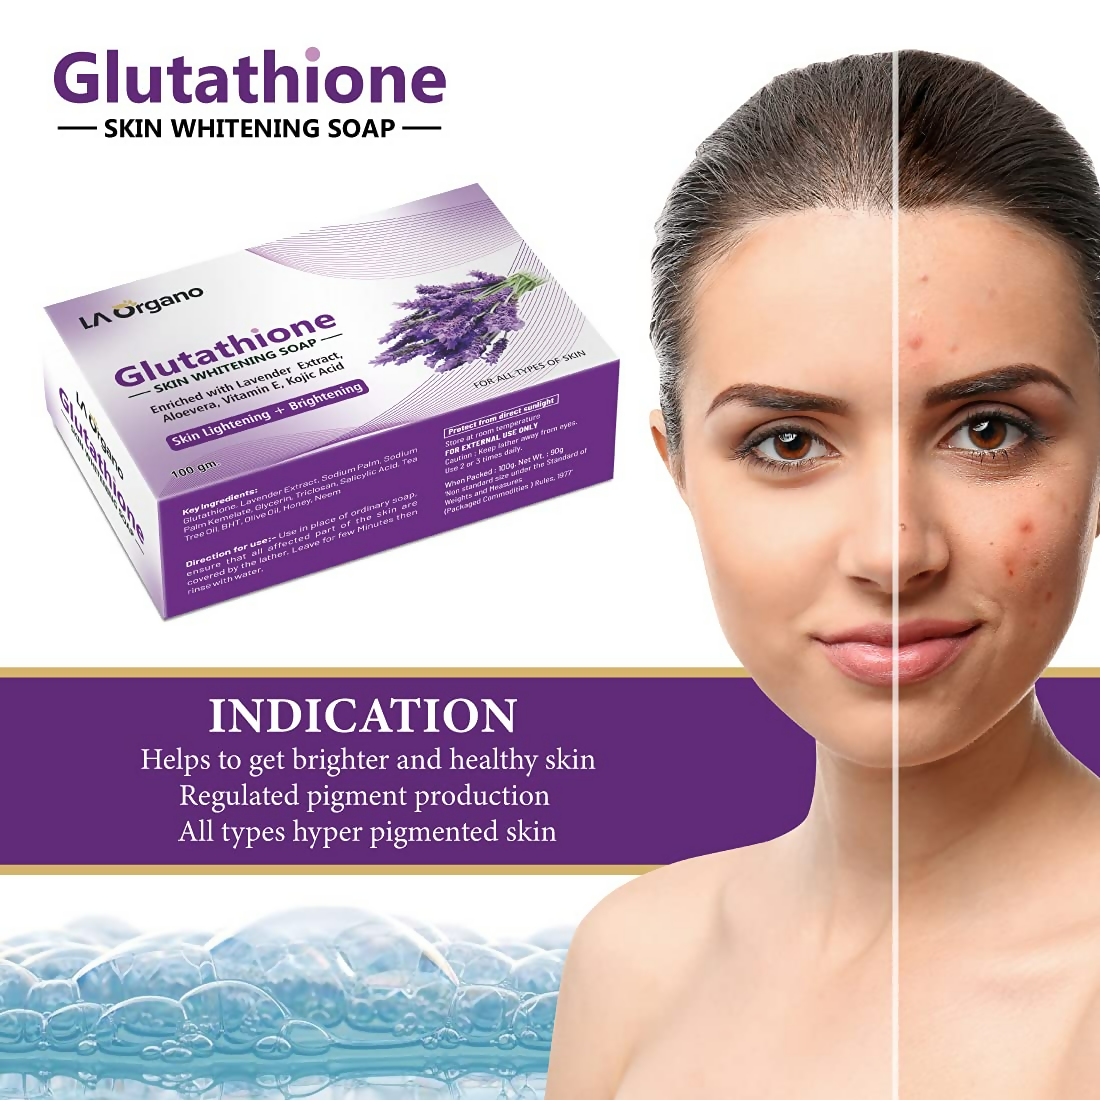 LA Organo Glutathione Lavender Skin Whitening Soap